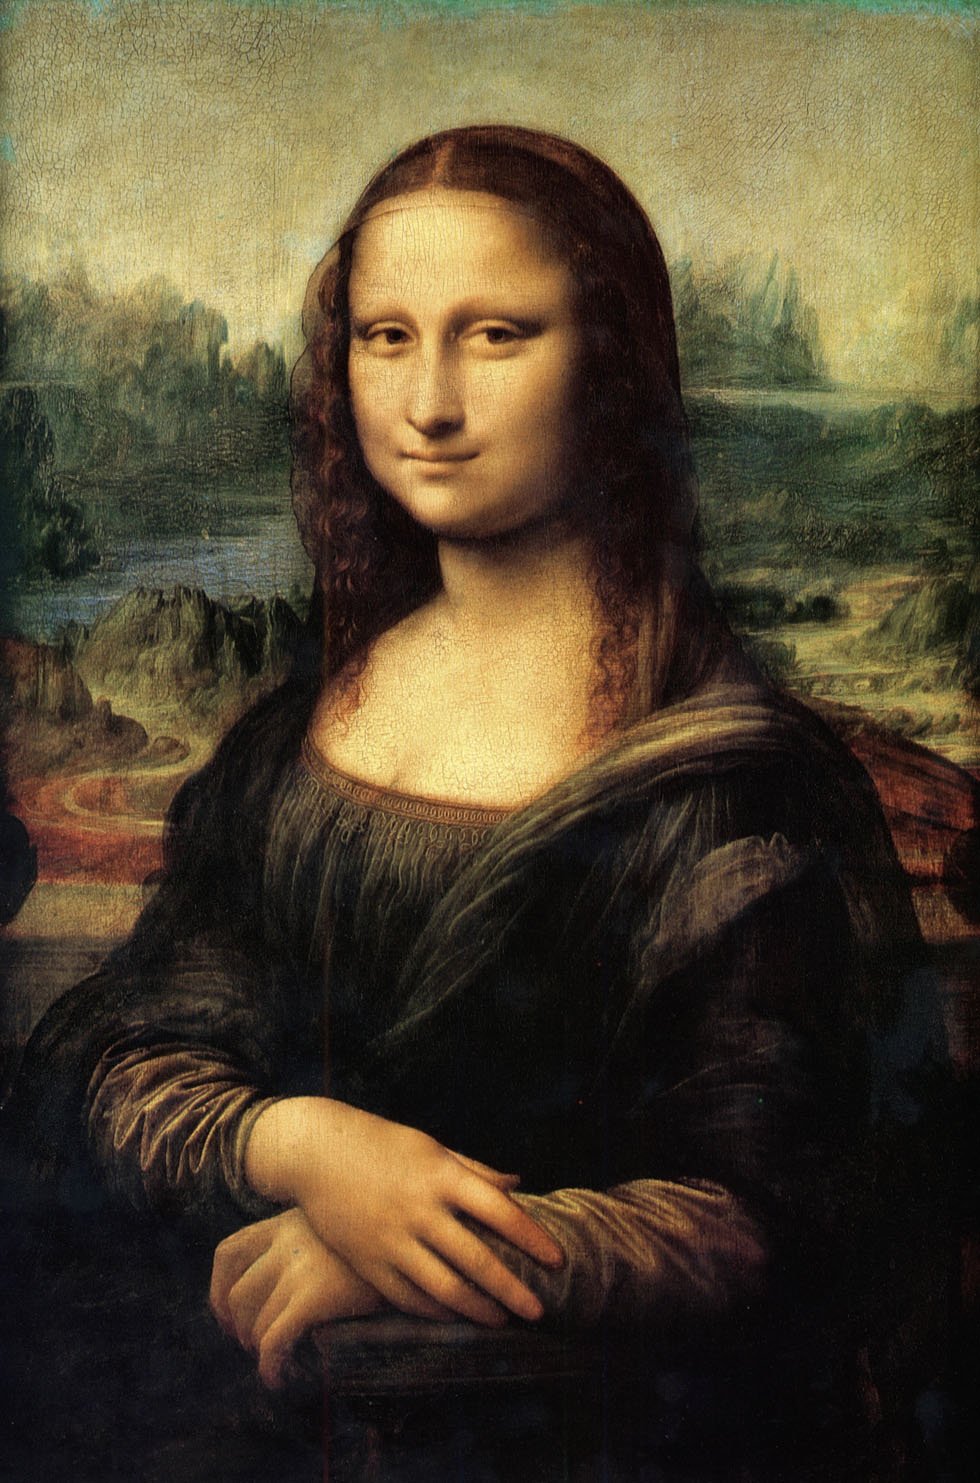 Bức họa nàng “Mona Lisa” - Leonardo da Vinci